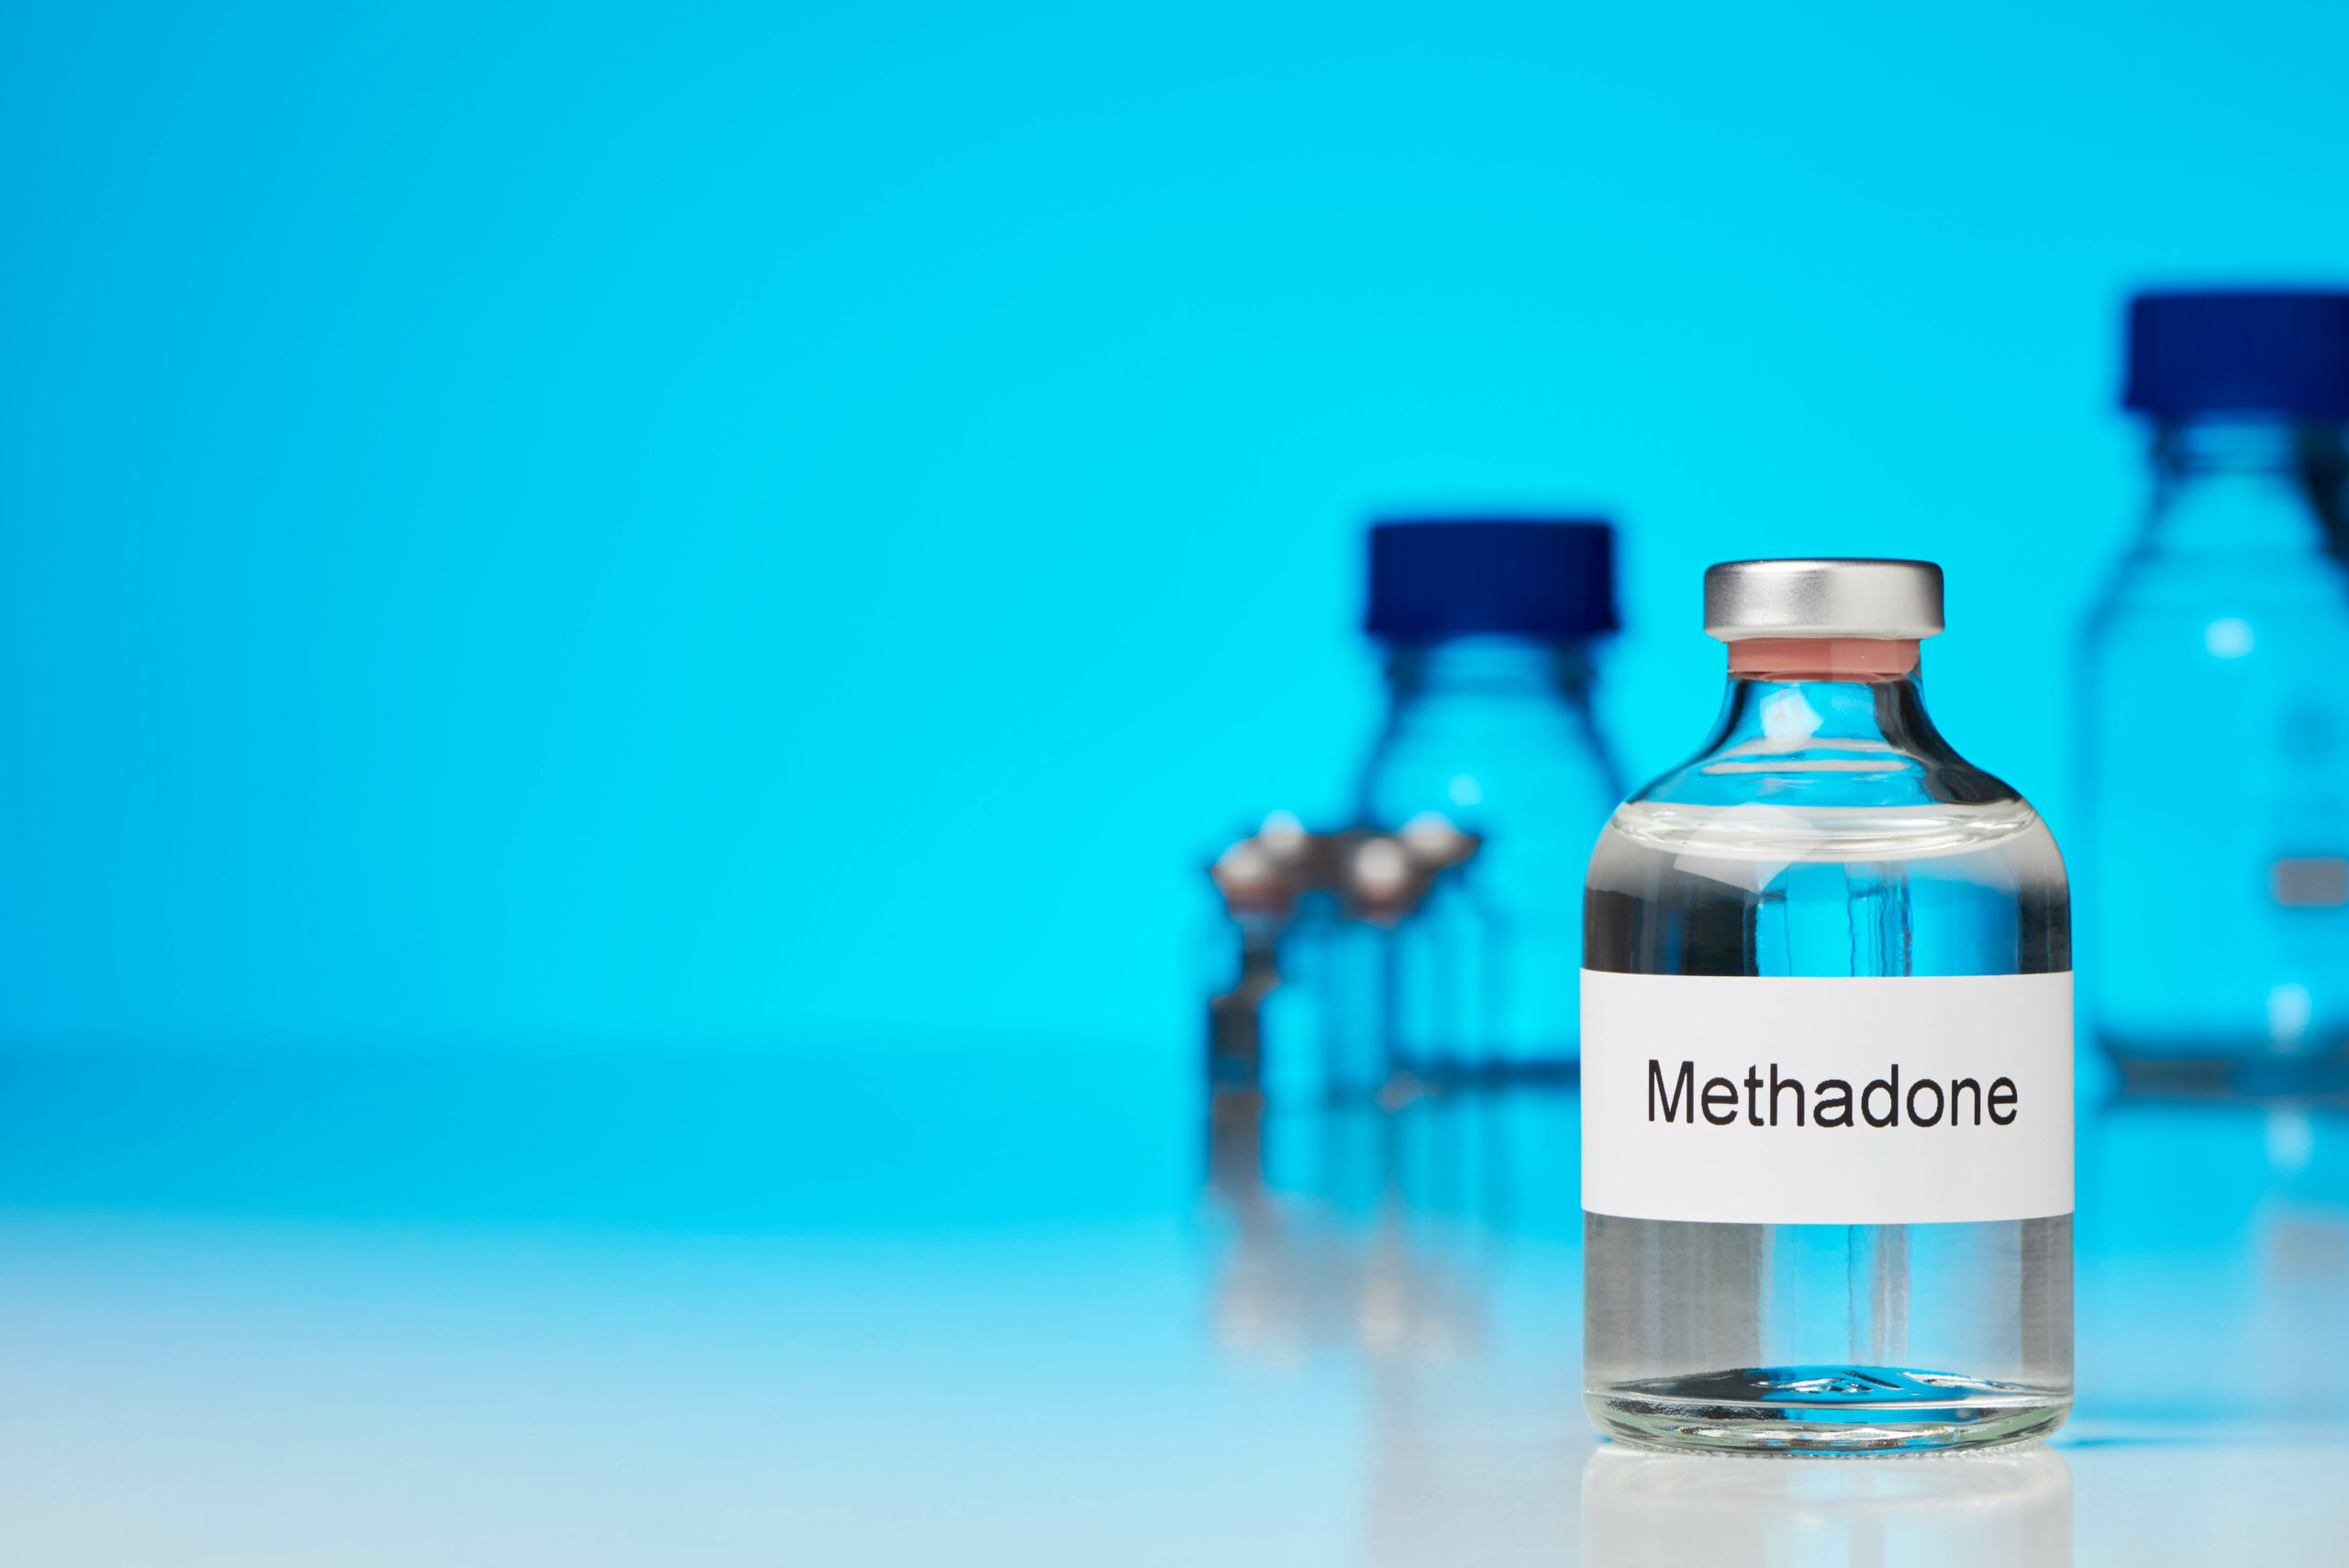 Methadone viles on a lab table